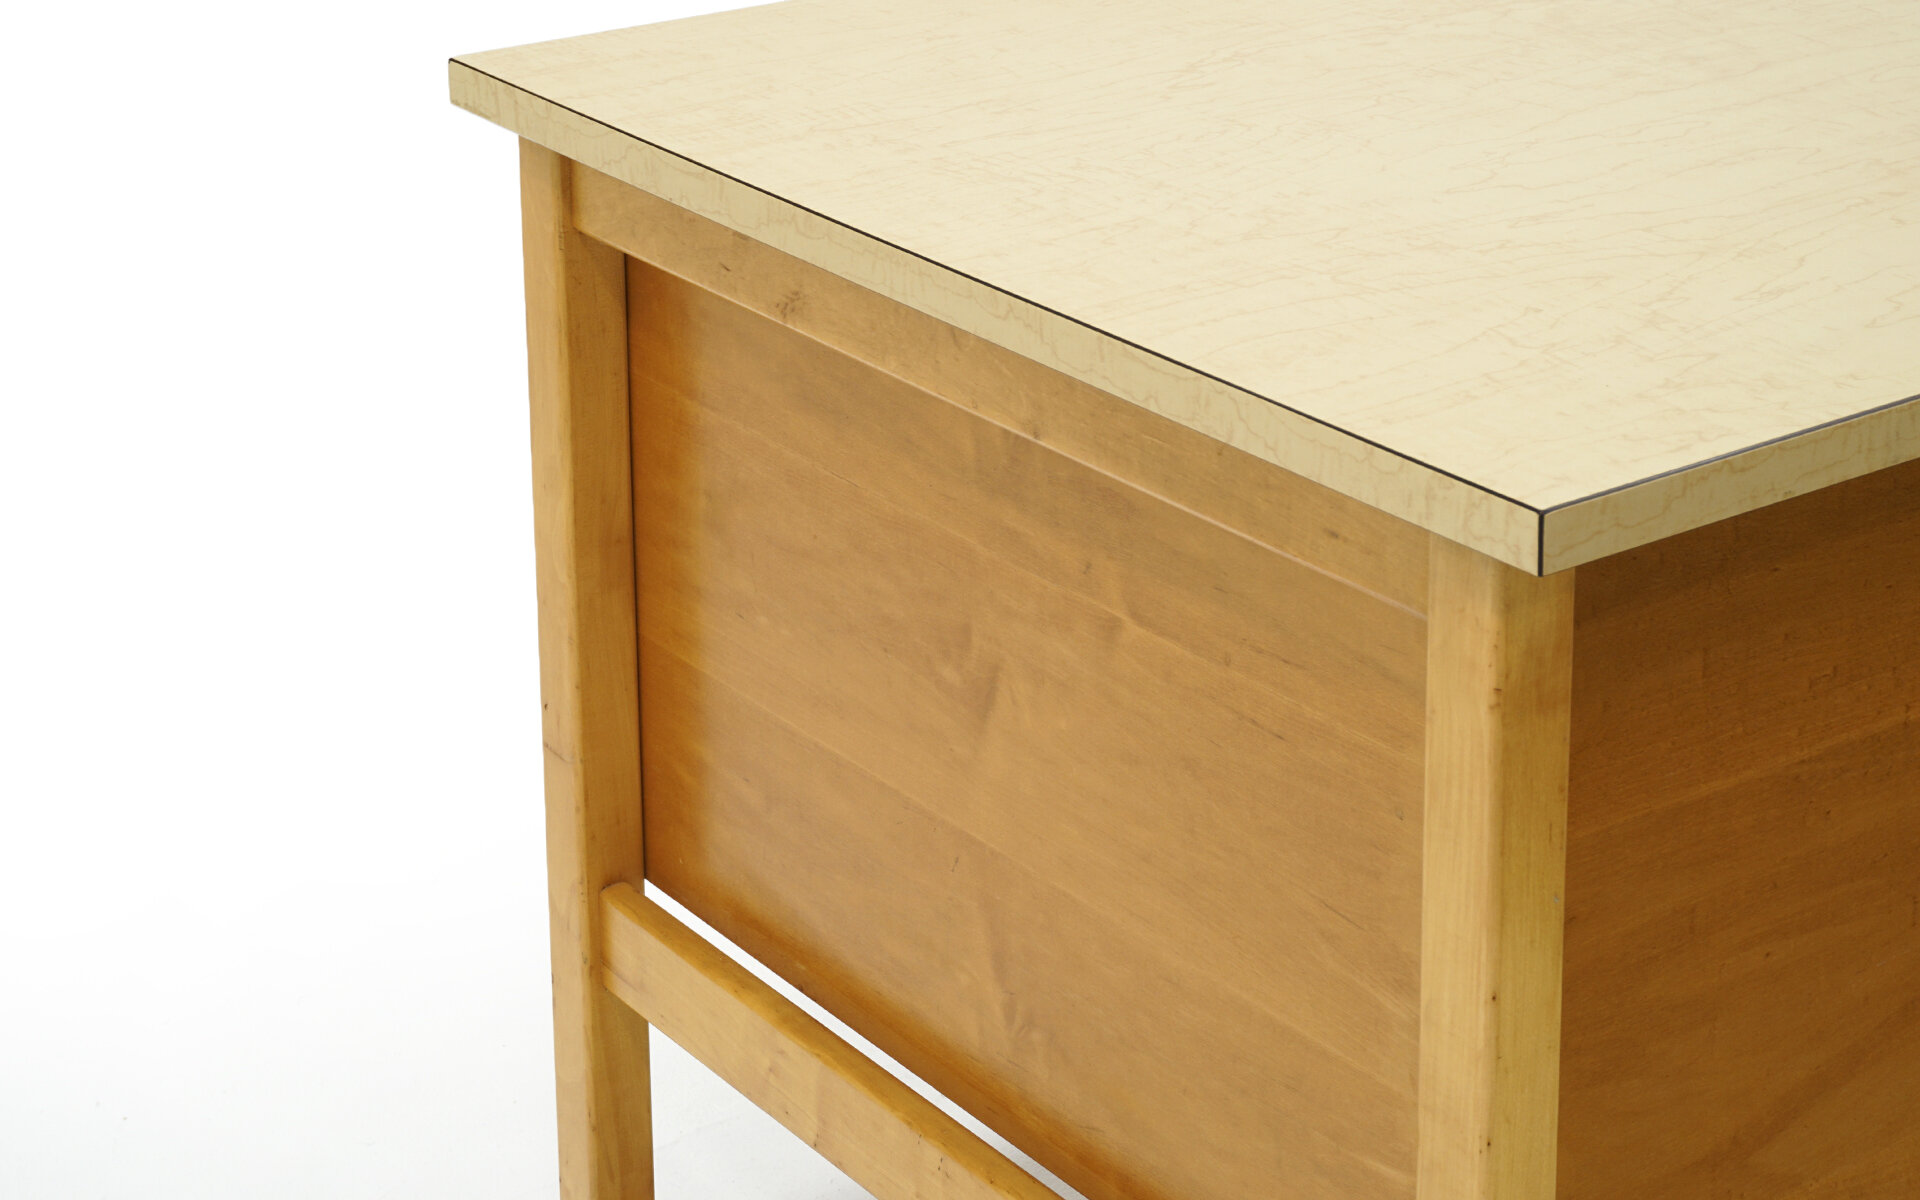 Details about   Frame wood rovescia pastellata bordeaux classic impressions table displays show original title 